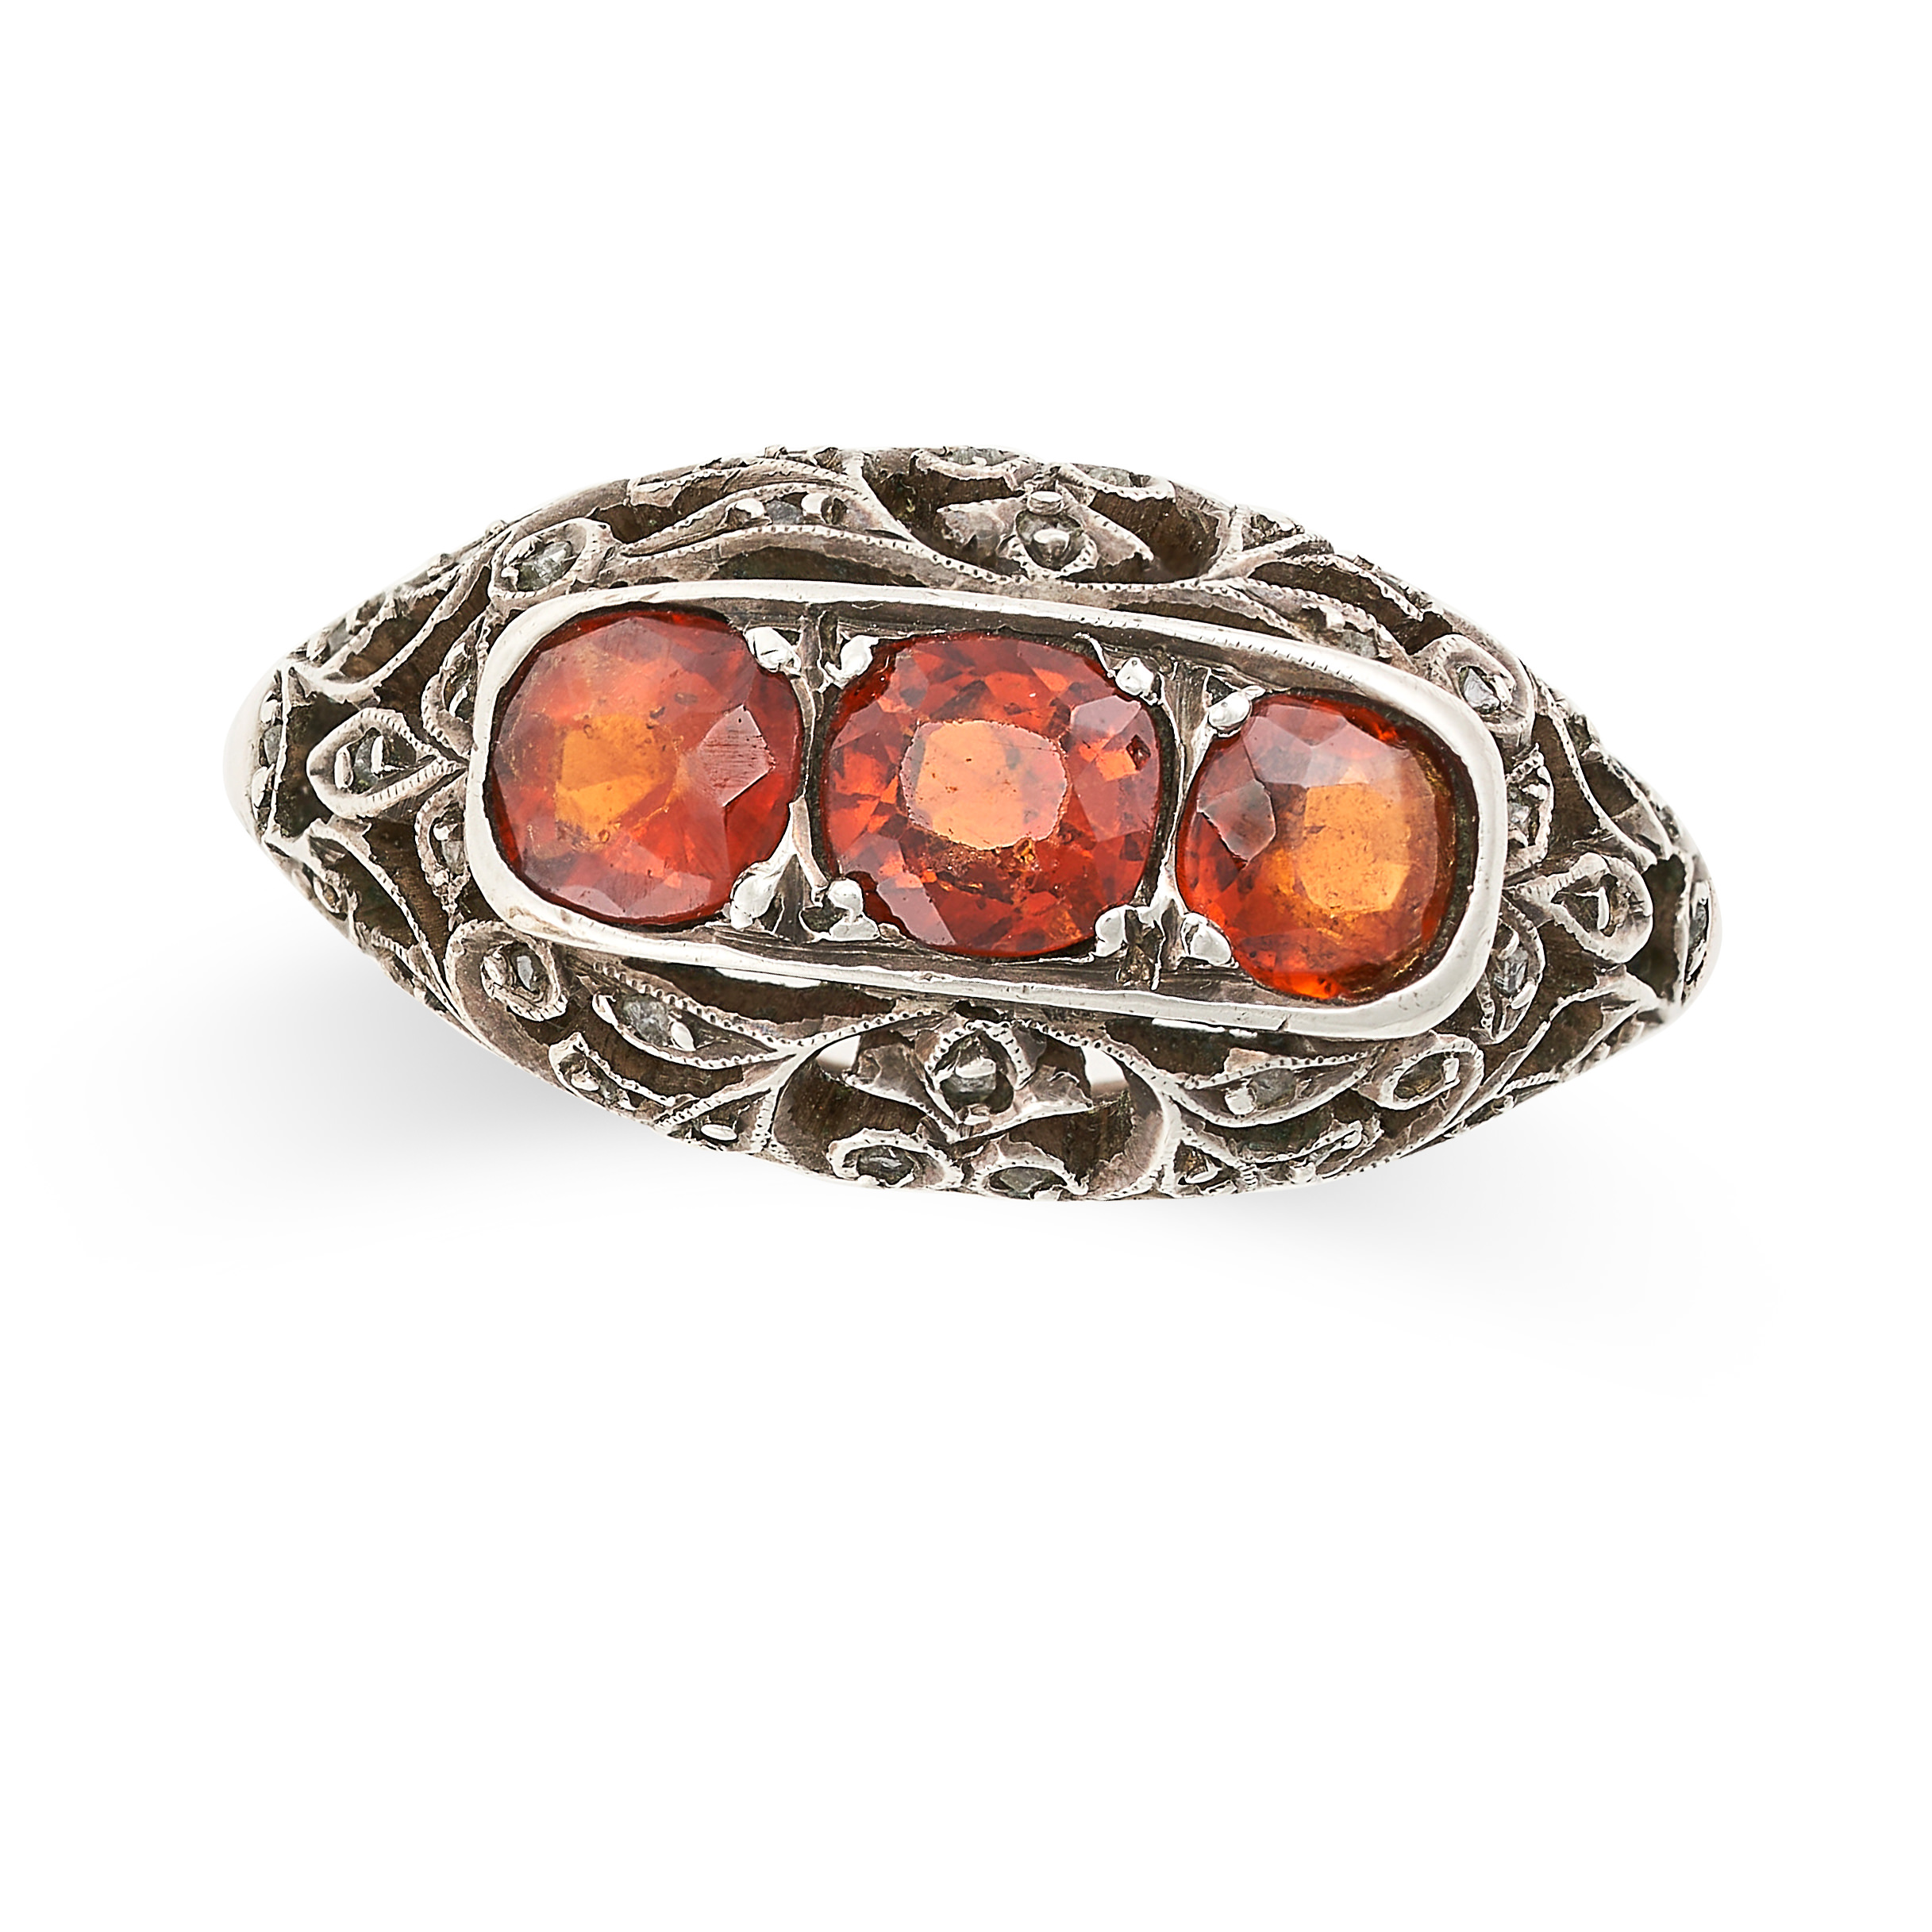 NO RESERVE - AN ORANGE PASTE AND DIAMOND RING set with three round cut orange paste gemstones in a